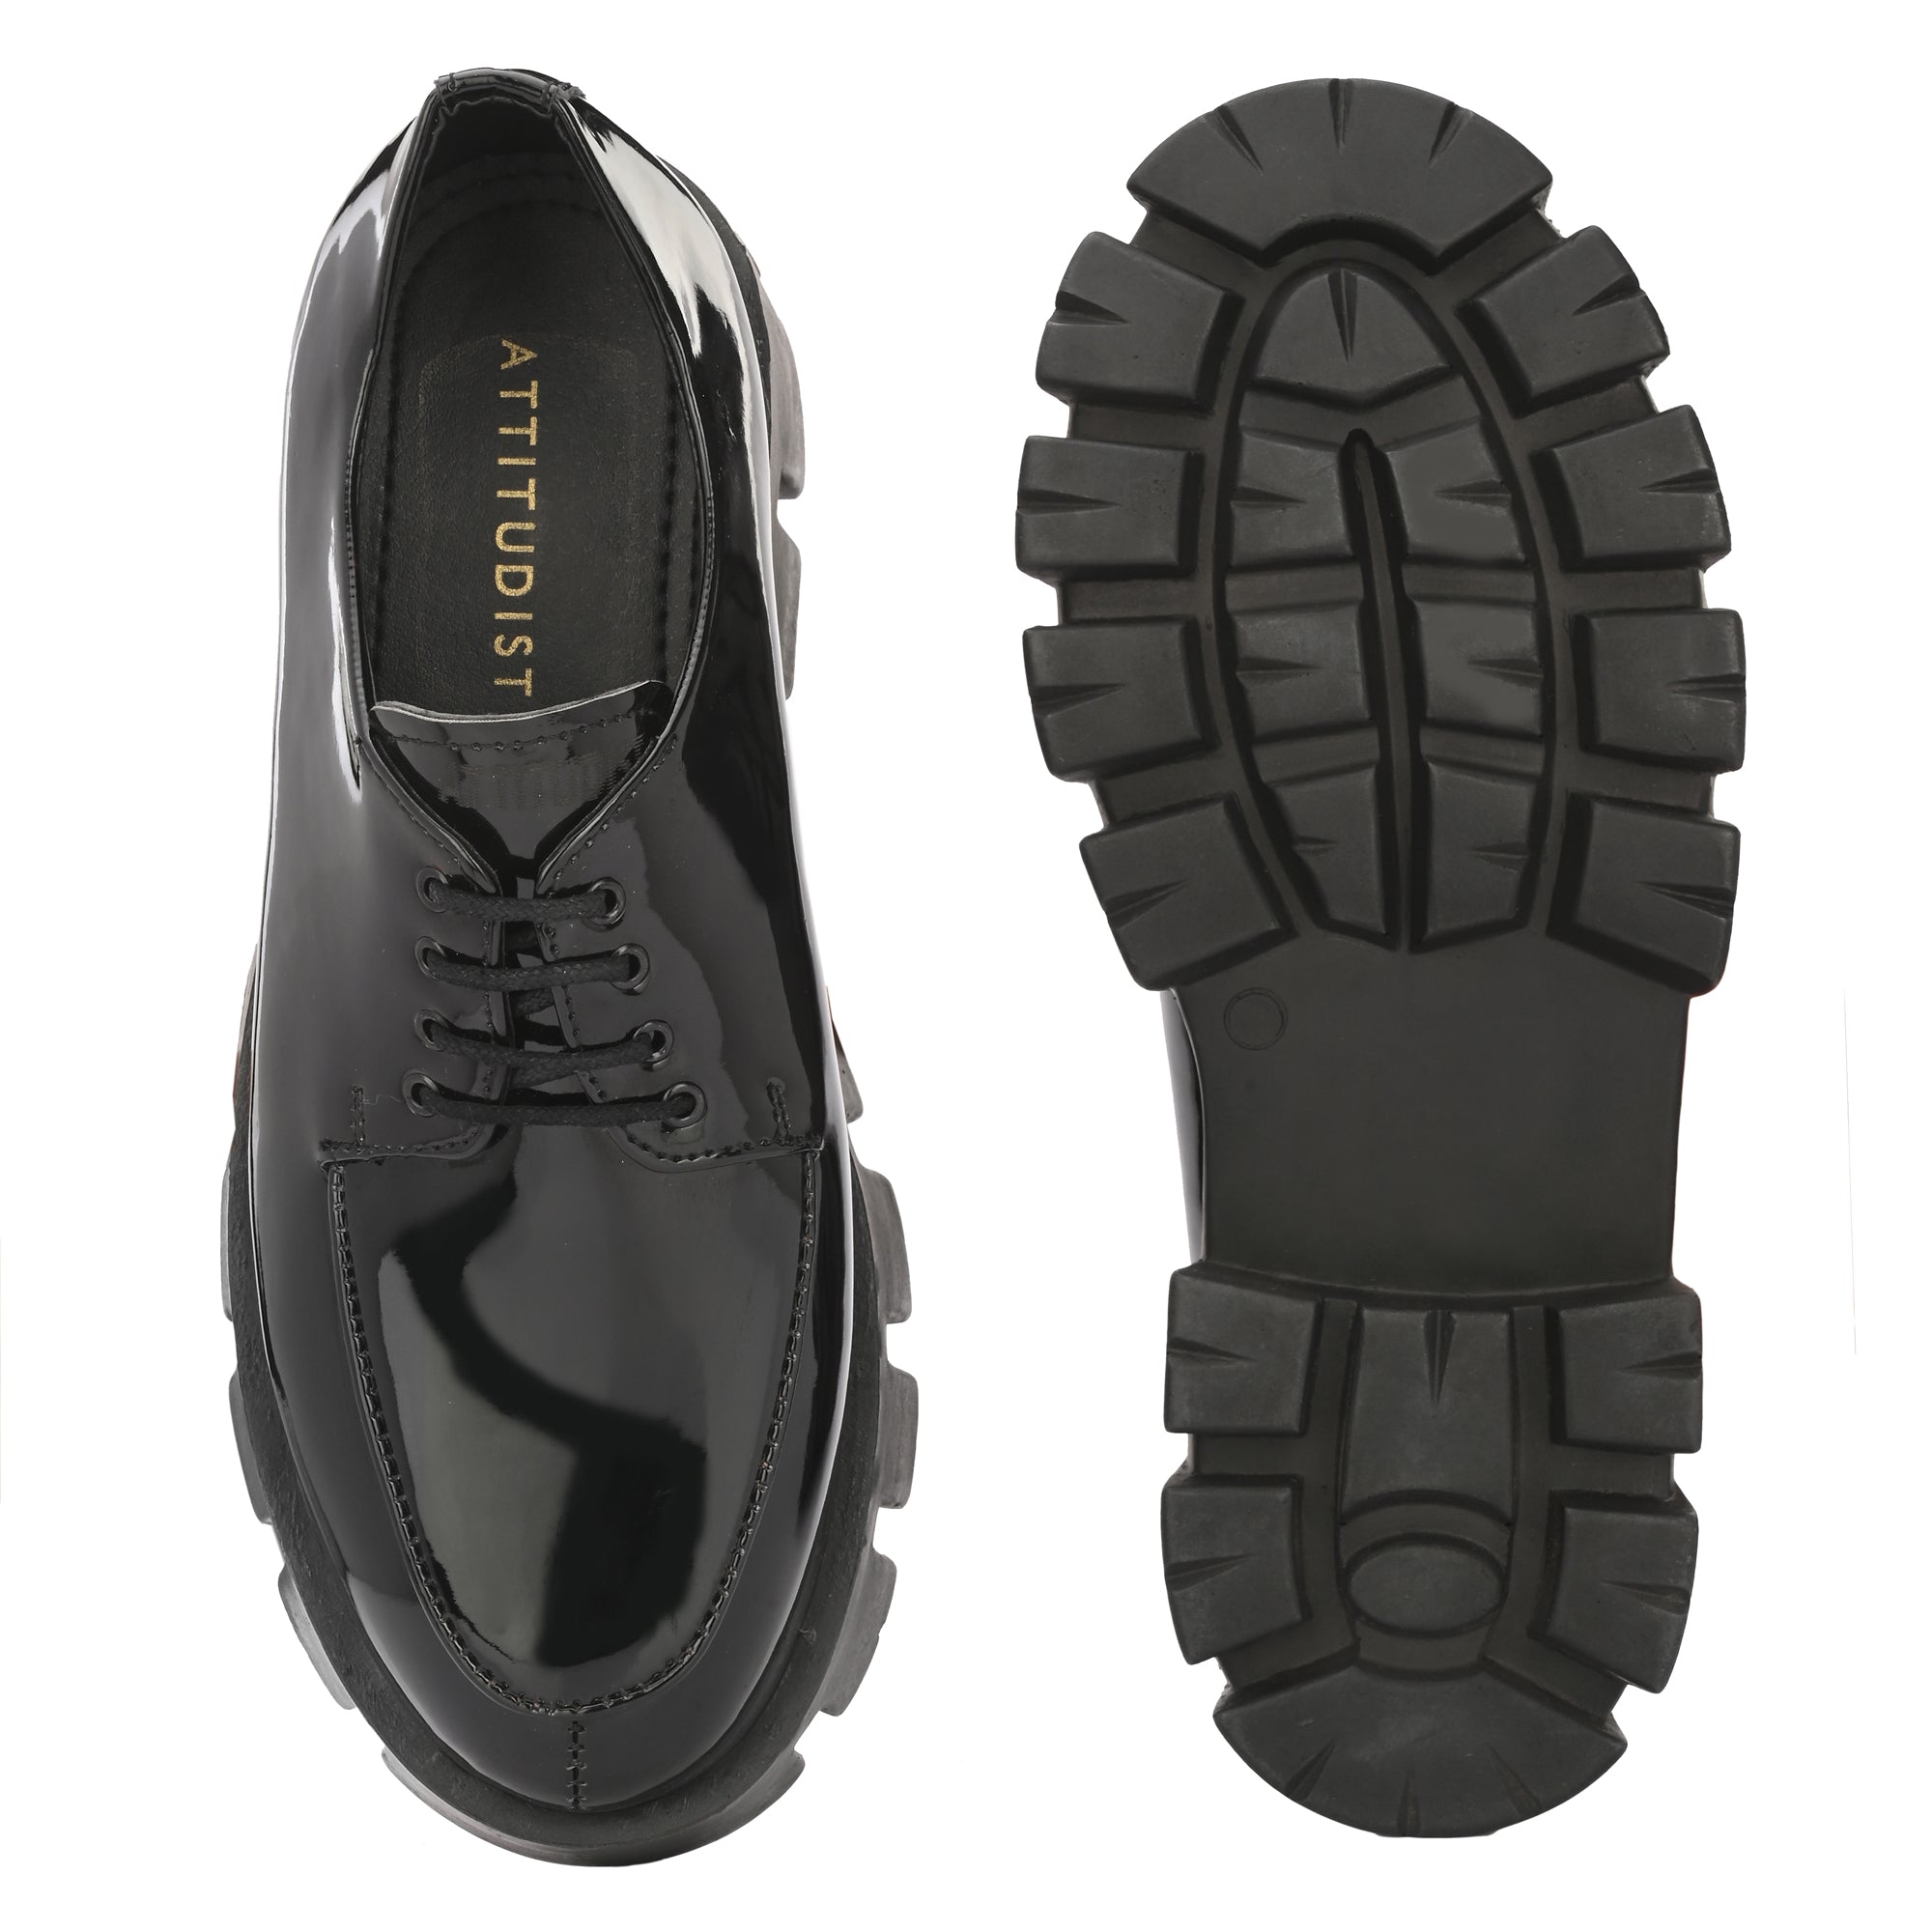 attitudist-glossy-black-high-heel-derby-shoes-for-men